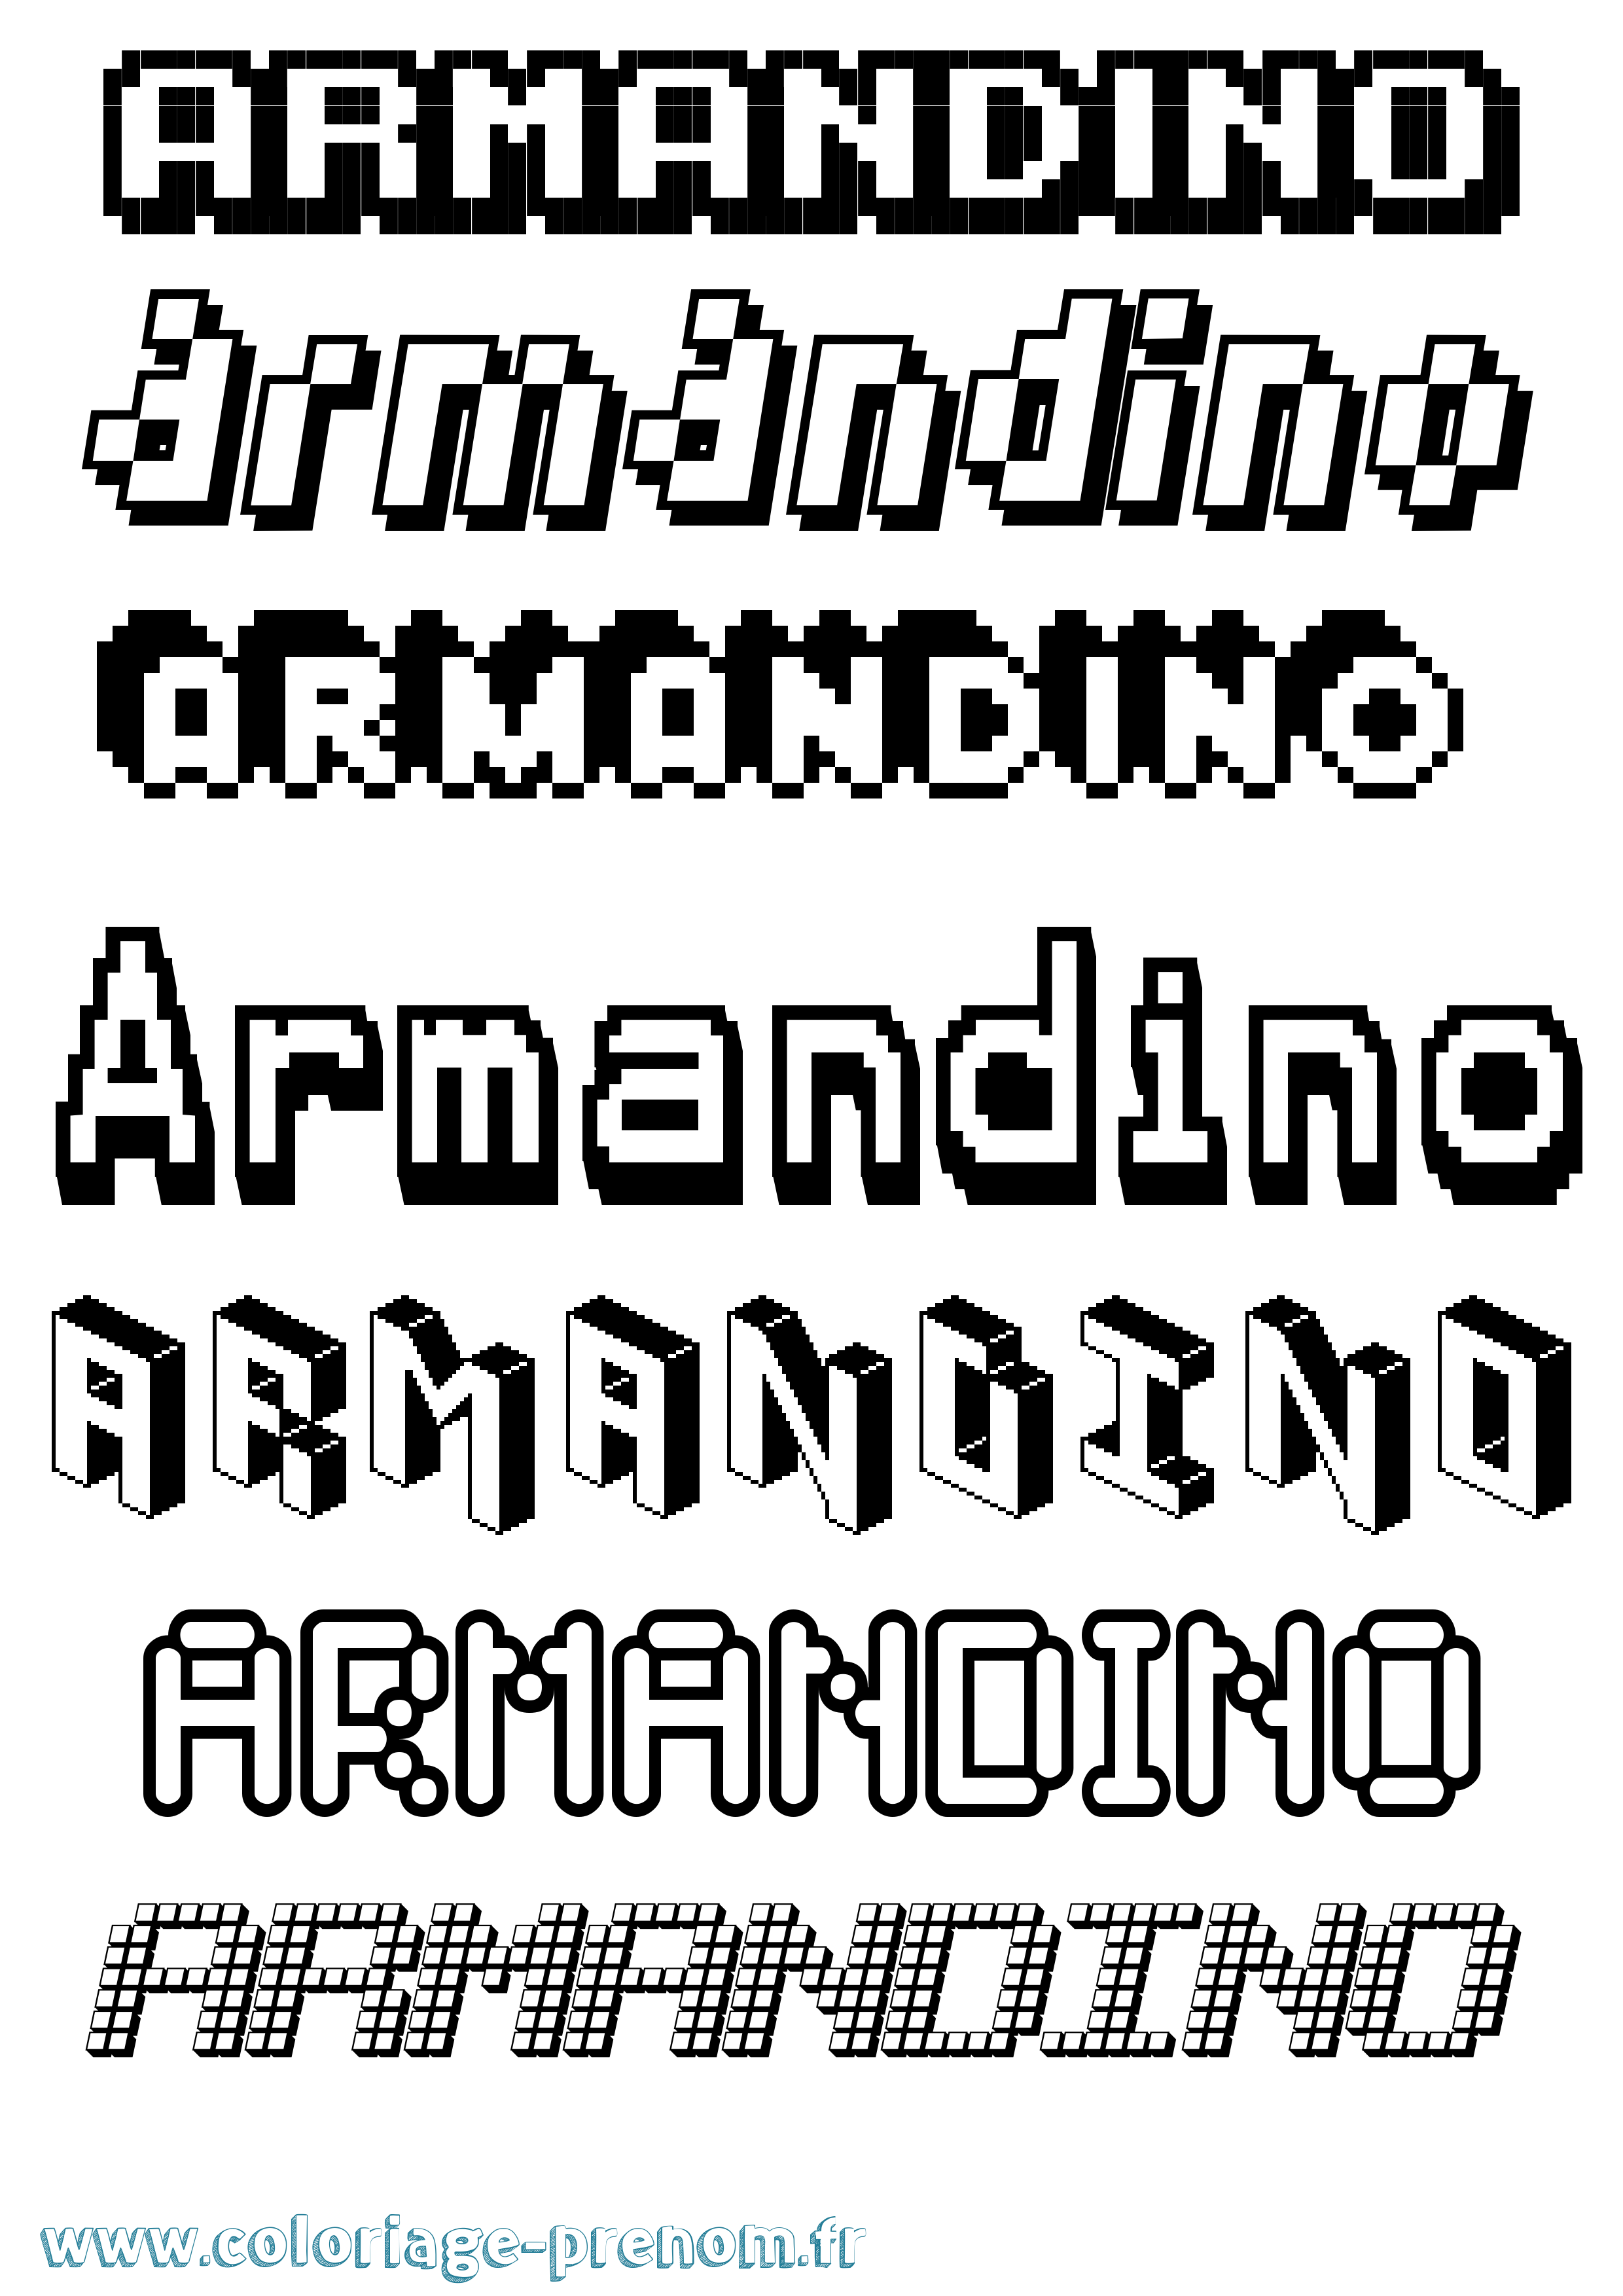 Coloriage prénom Armandino Pixel